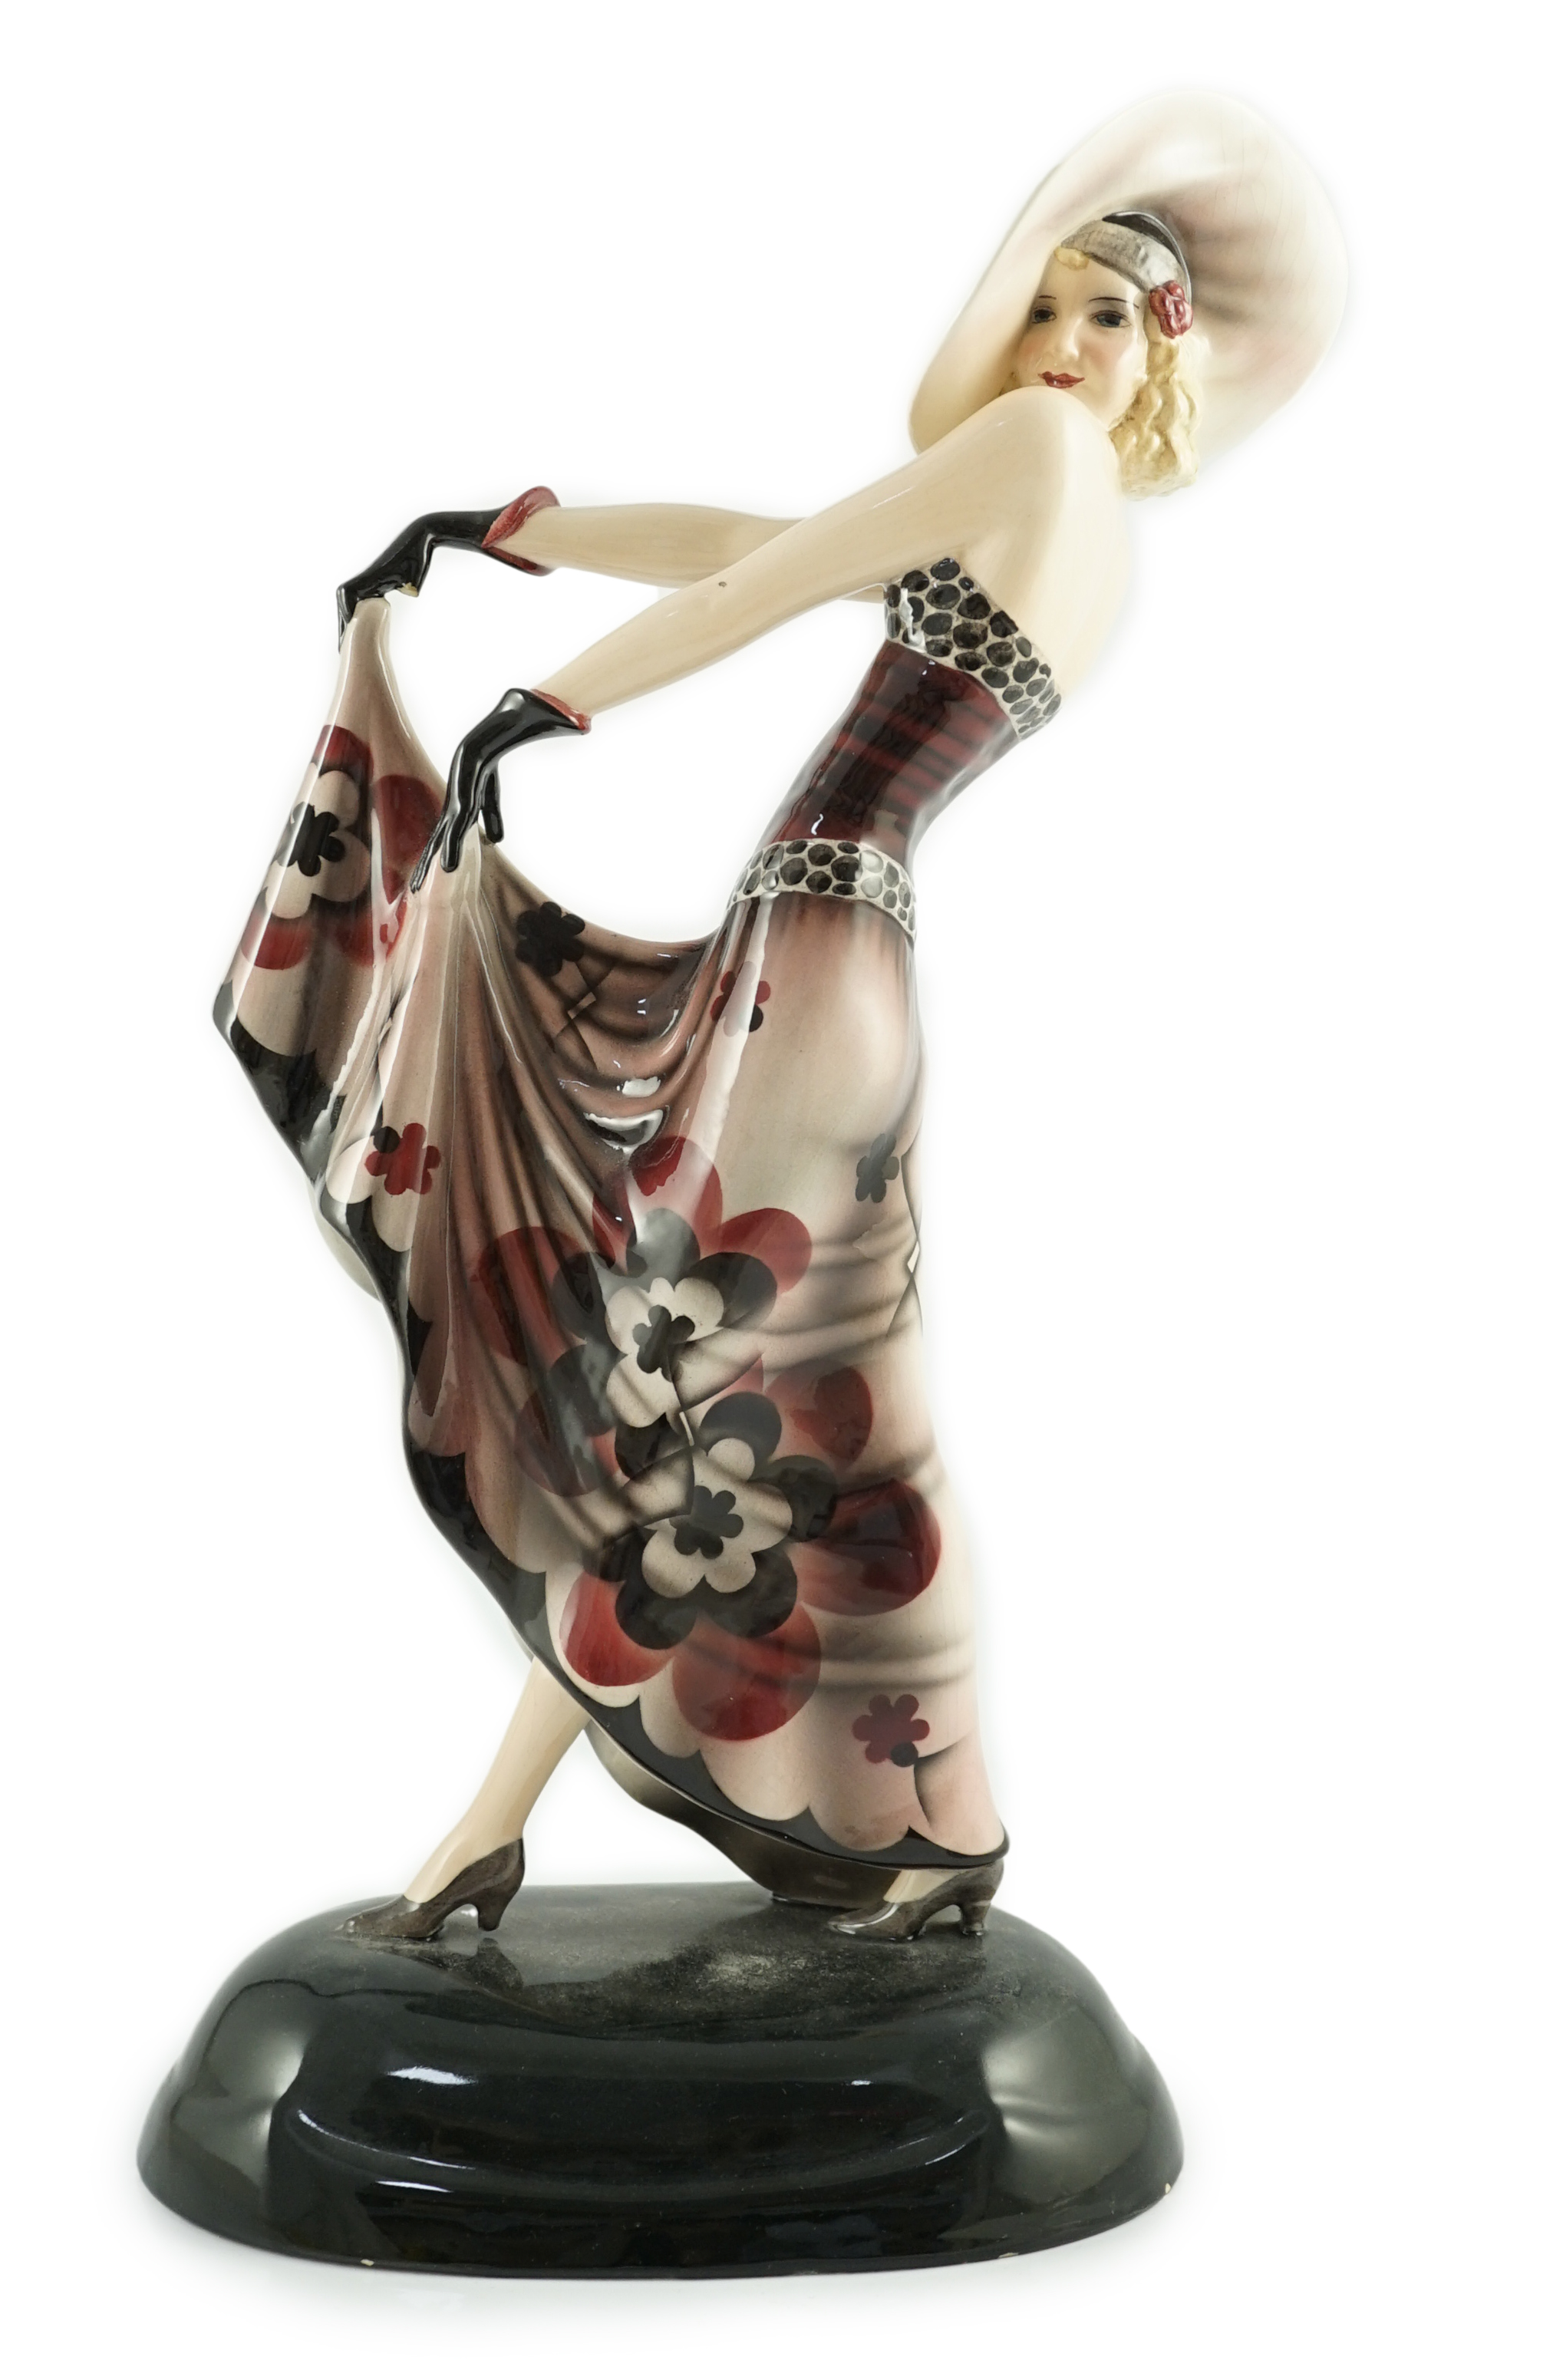 Stefan Dakon for Goldscheider, an Art Deco pottery figure ‘Blonde Dream’ (Lillian Harvey), c.1933, minor damage